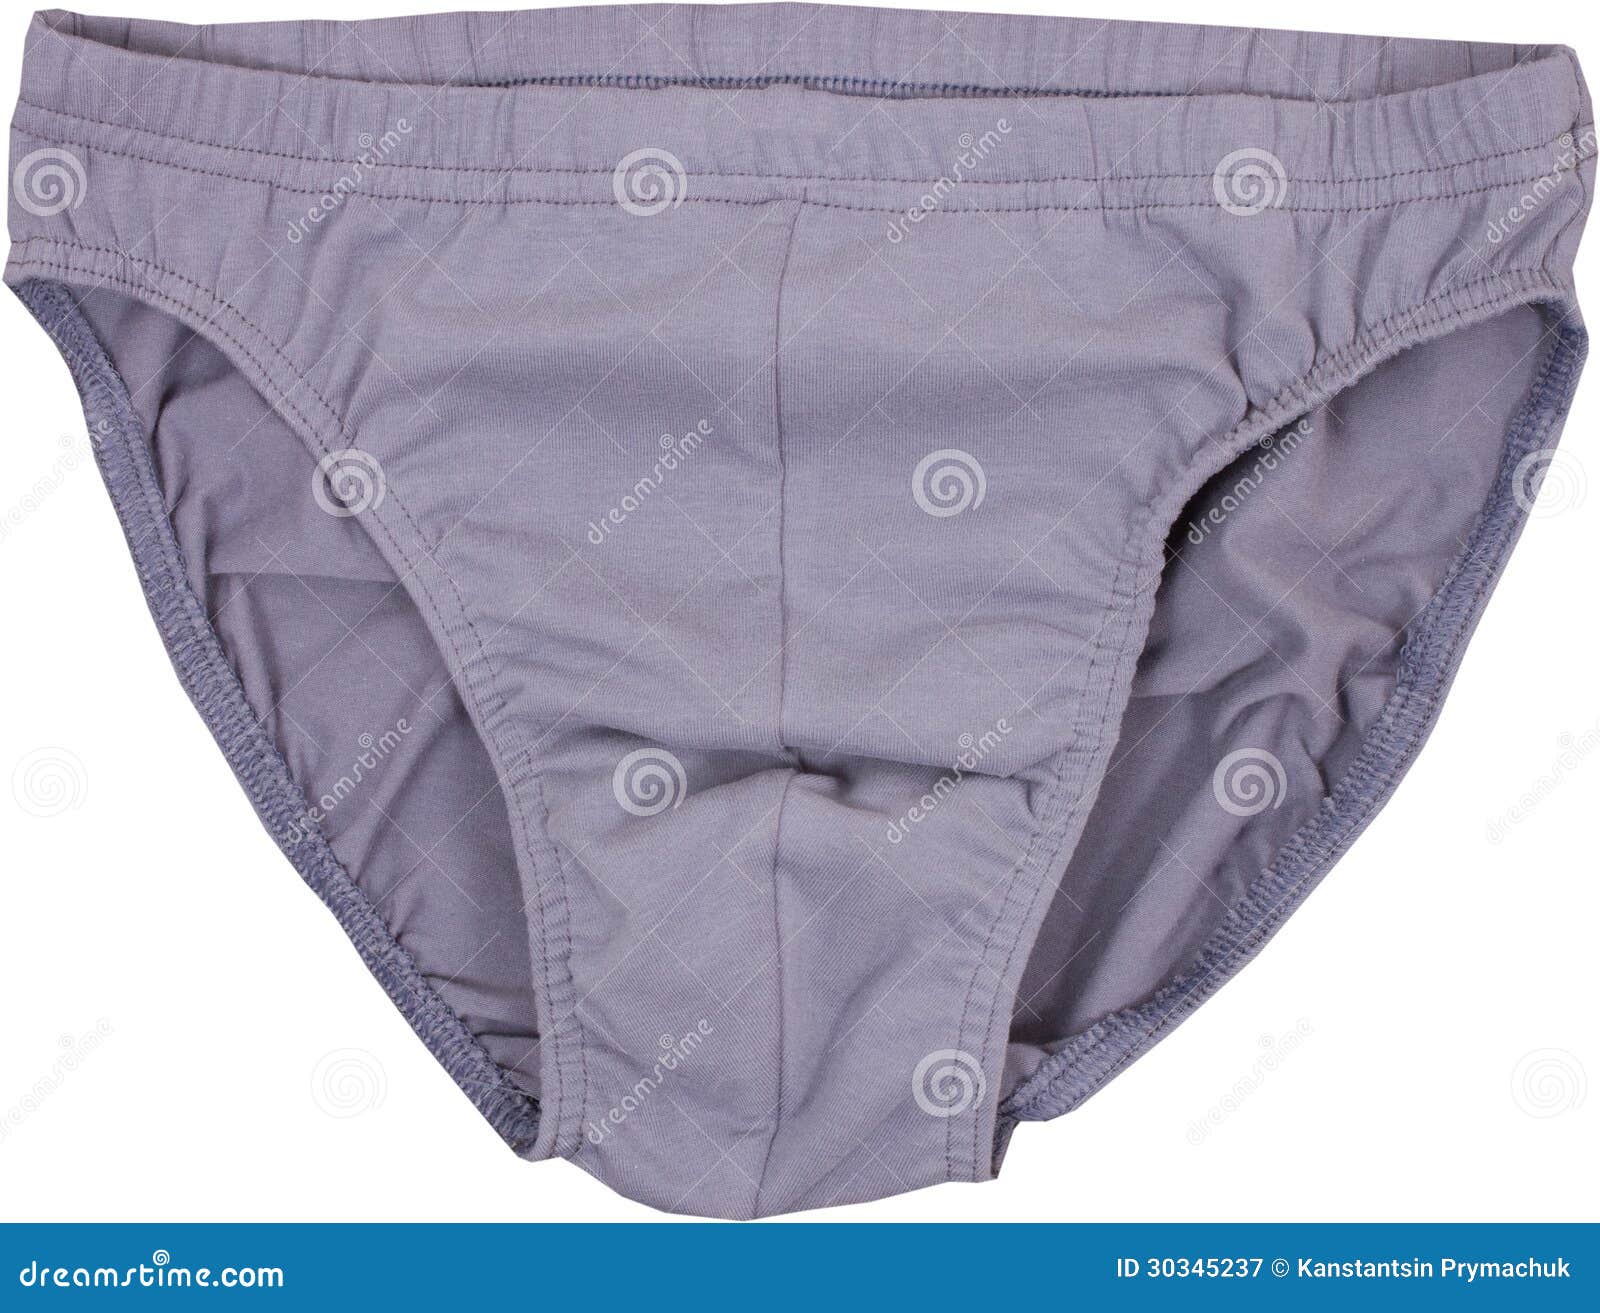 Male pants isolated stock image. Image of blinkers, shorts - 30345237